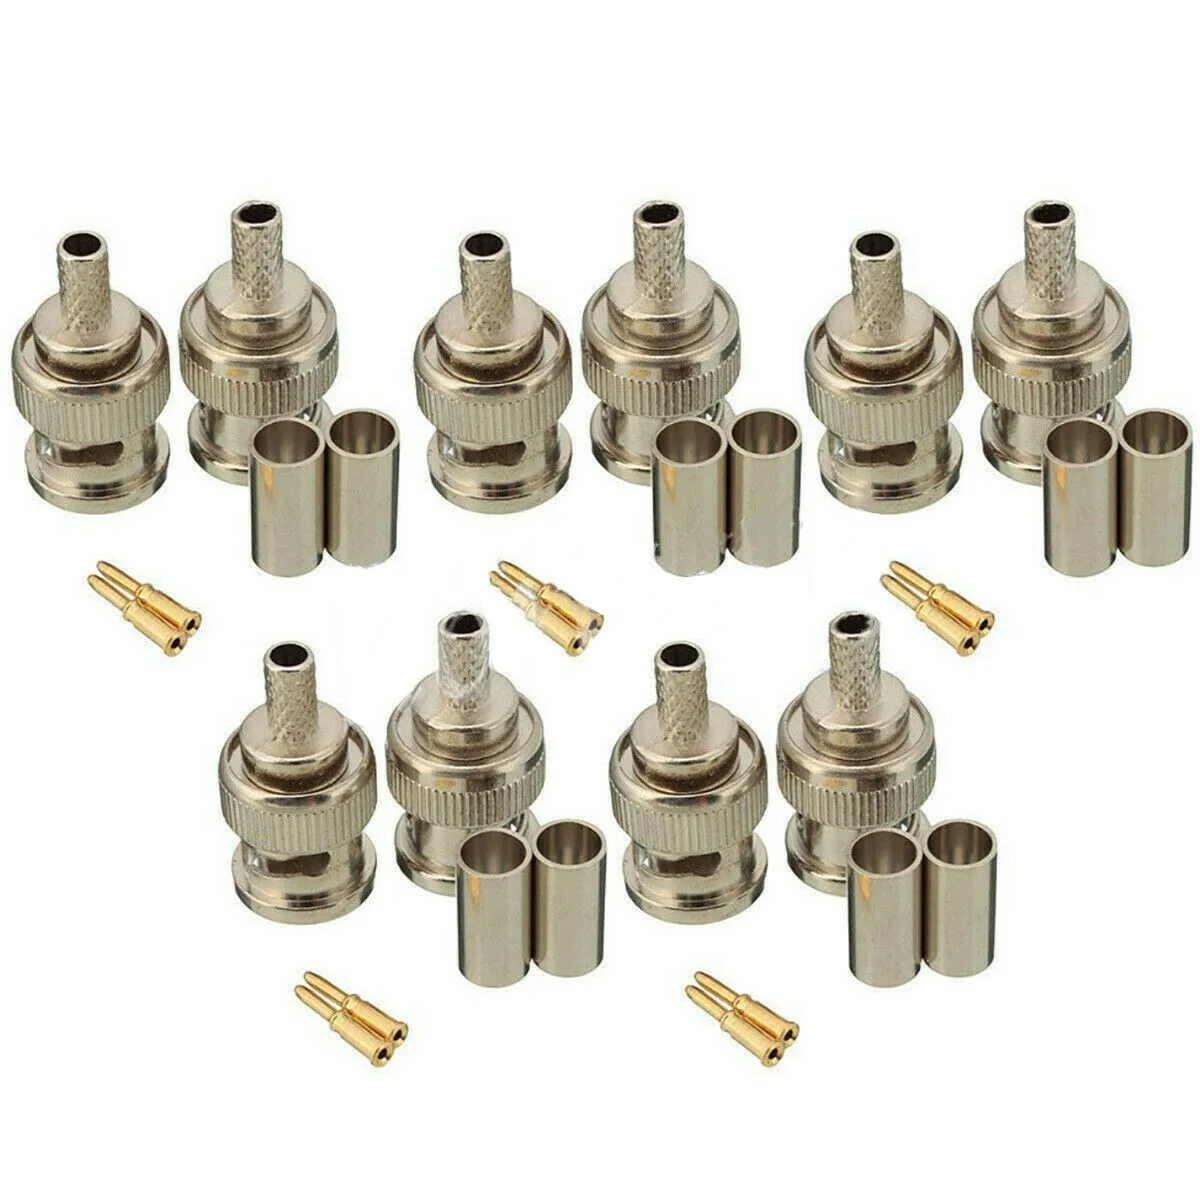 

10 Sets 3PCS BNC Male RG58 Plug Connector Crimp Connectors For RG58 RG142 LMR195 RG400 Cable Coaxial RF Brass Copper